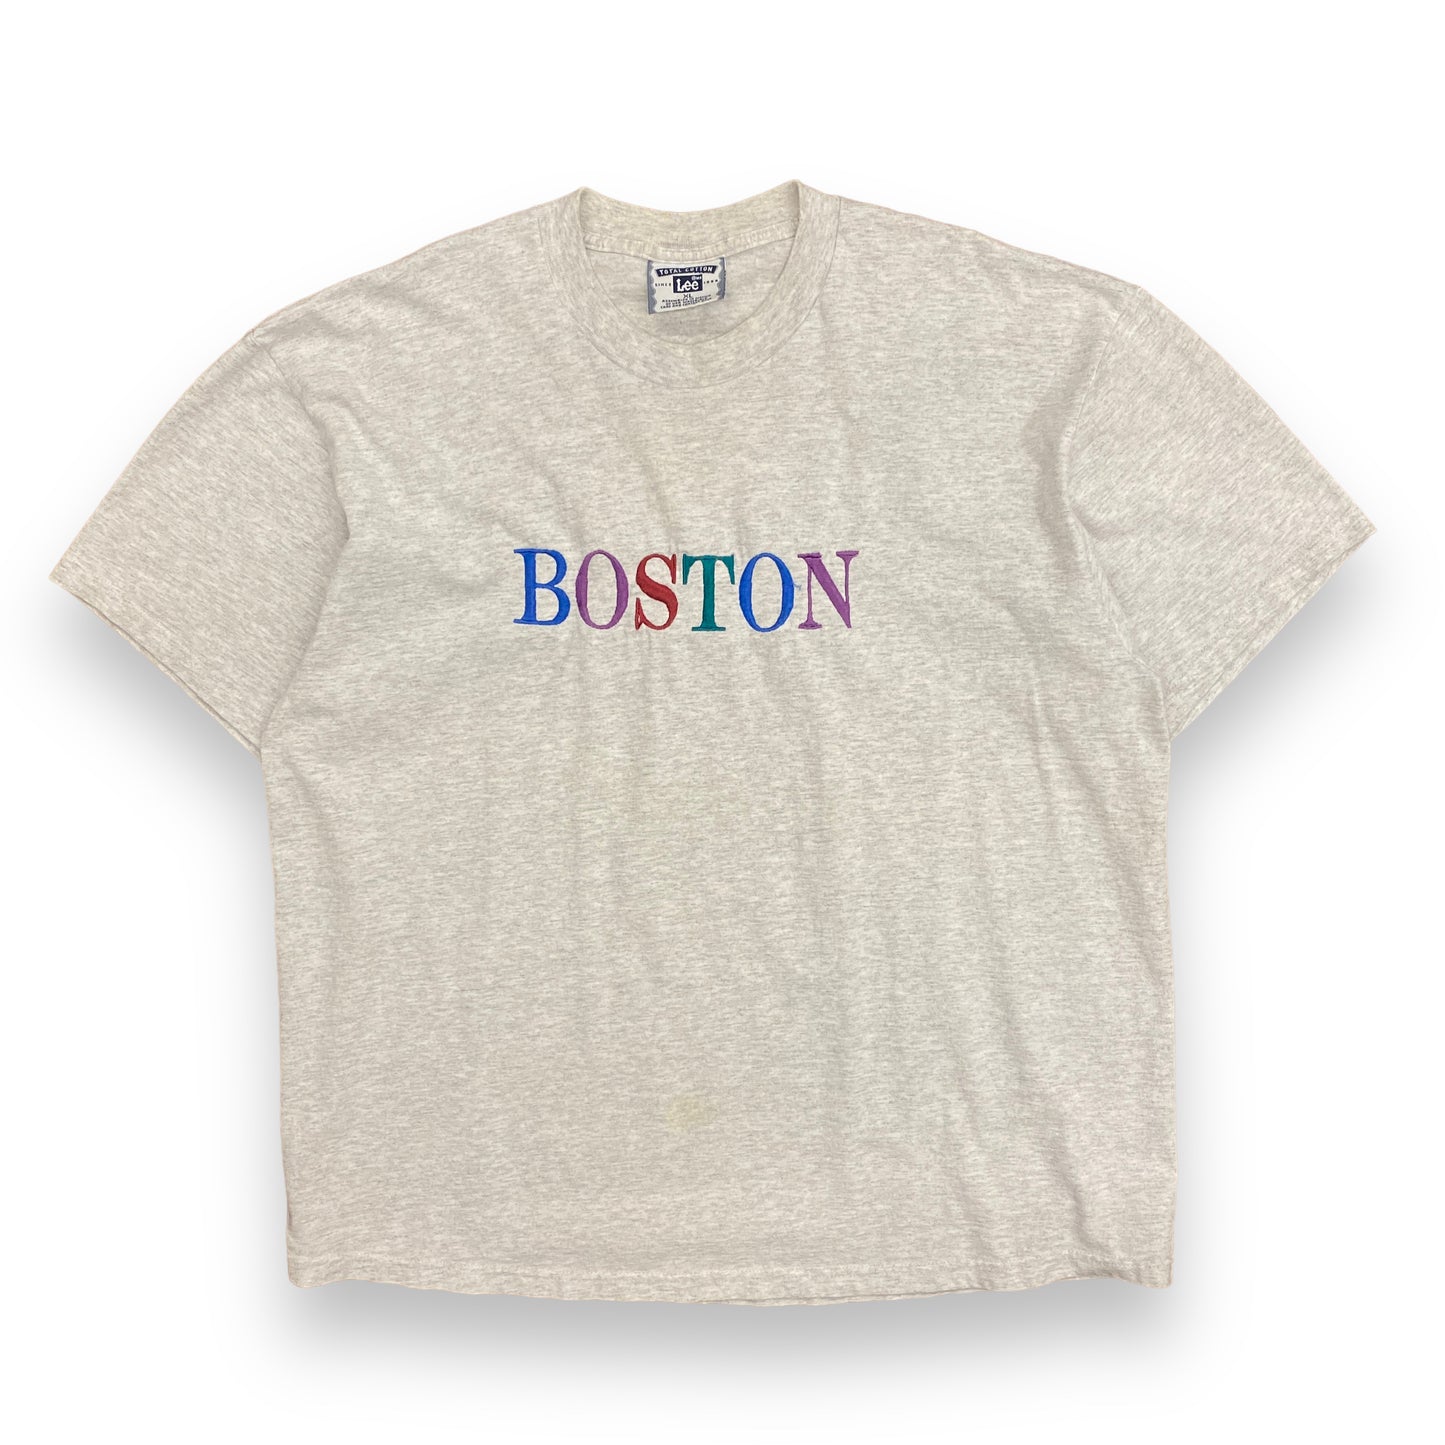 1990s "Boston" Embroidered Heather Gray Tee - Size XL